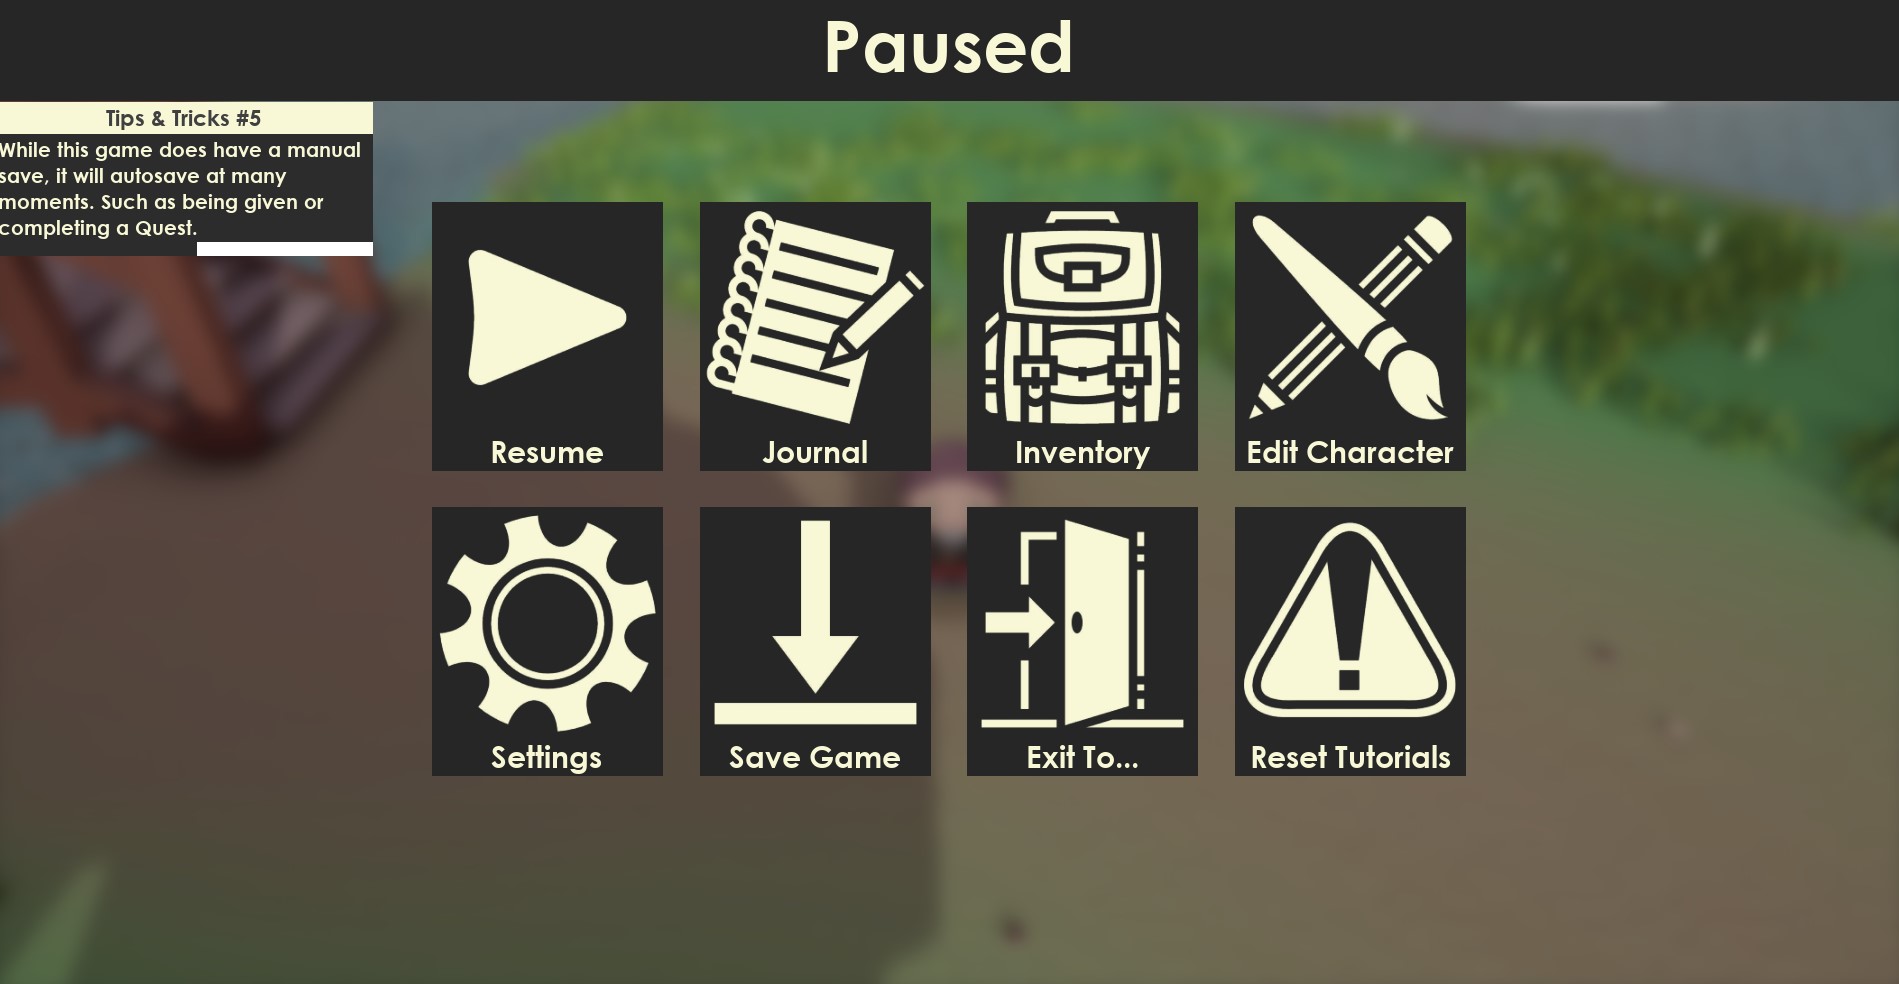 BSc Games Development work by Josh Brinton, a pause menu showcasing the unique UI Design.